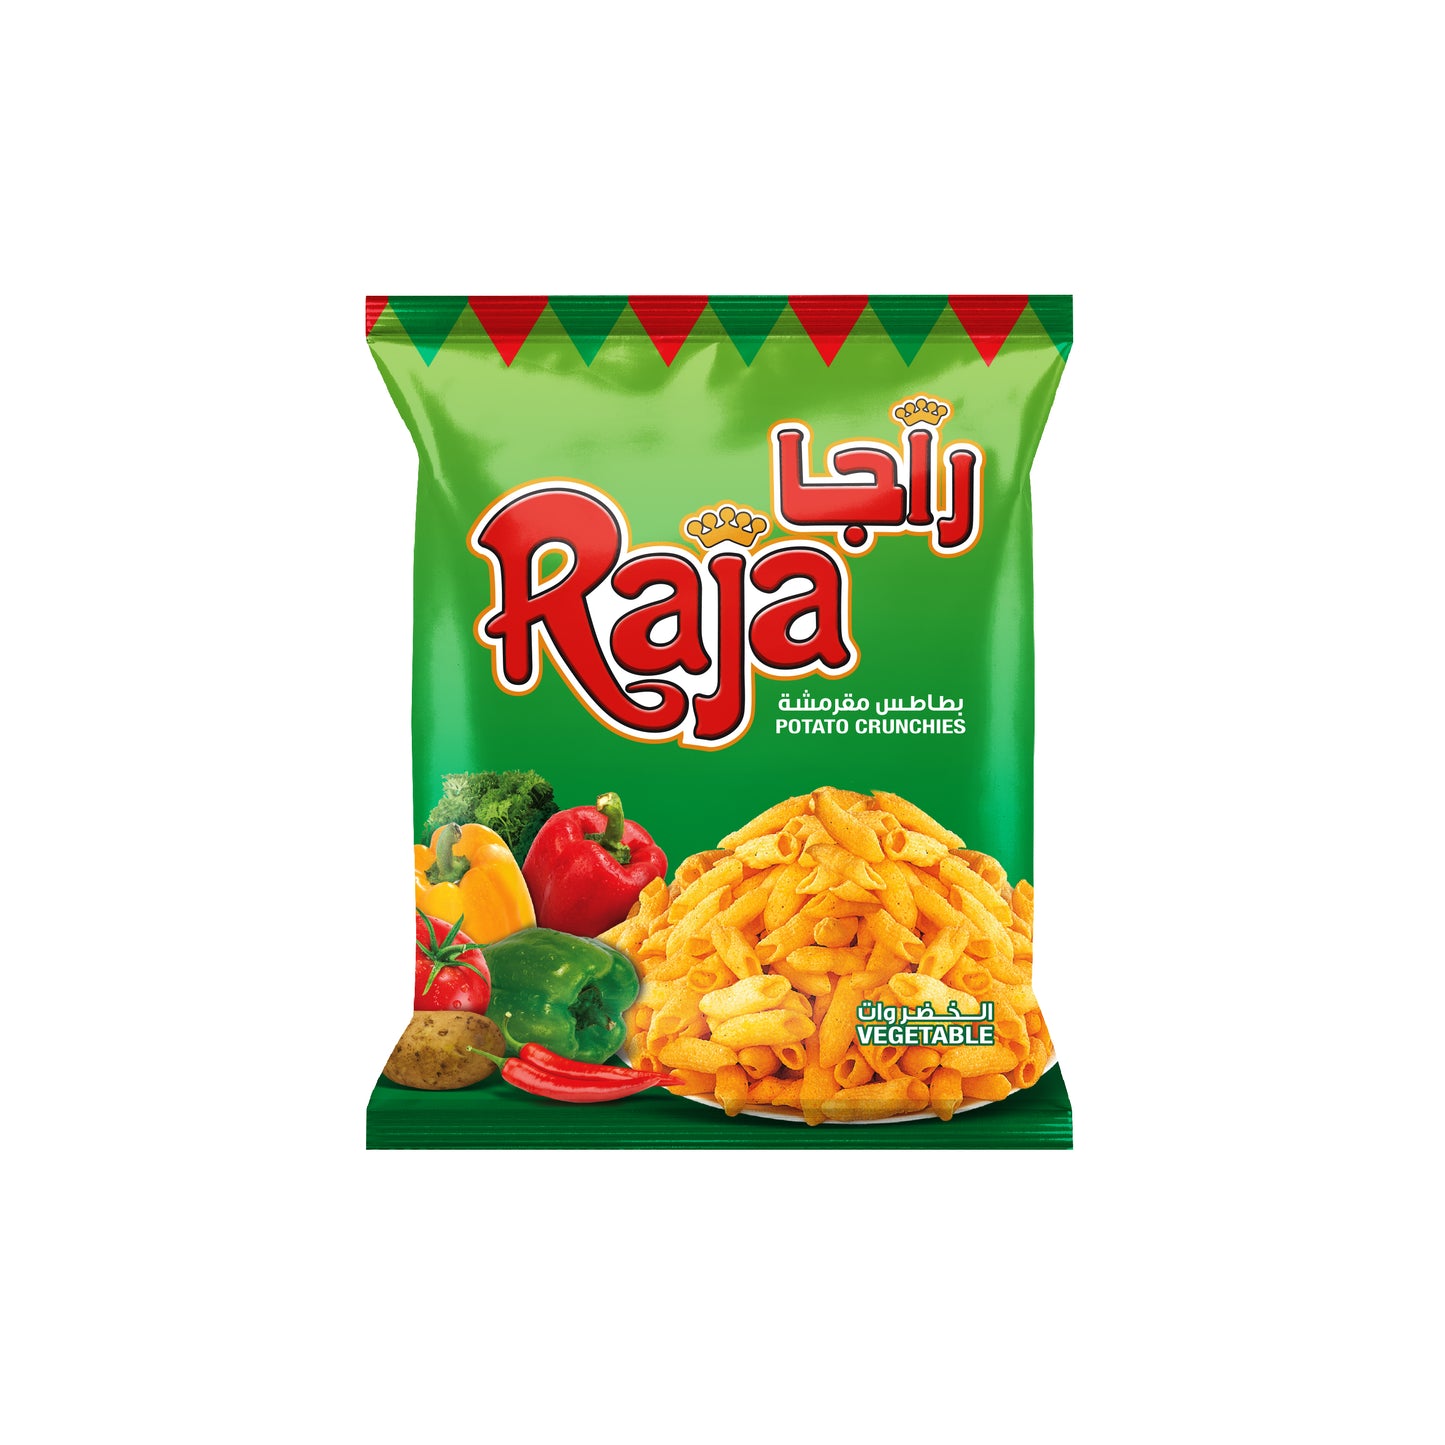 Raja Potato Crunchies Vegetable Flavor 15gm x 25 pcs (Box)